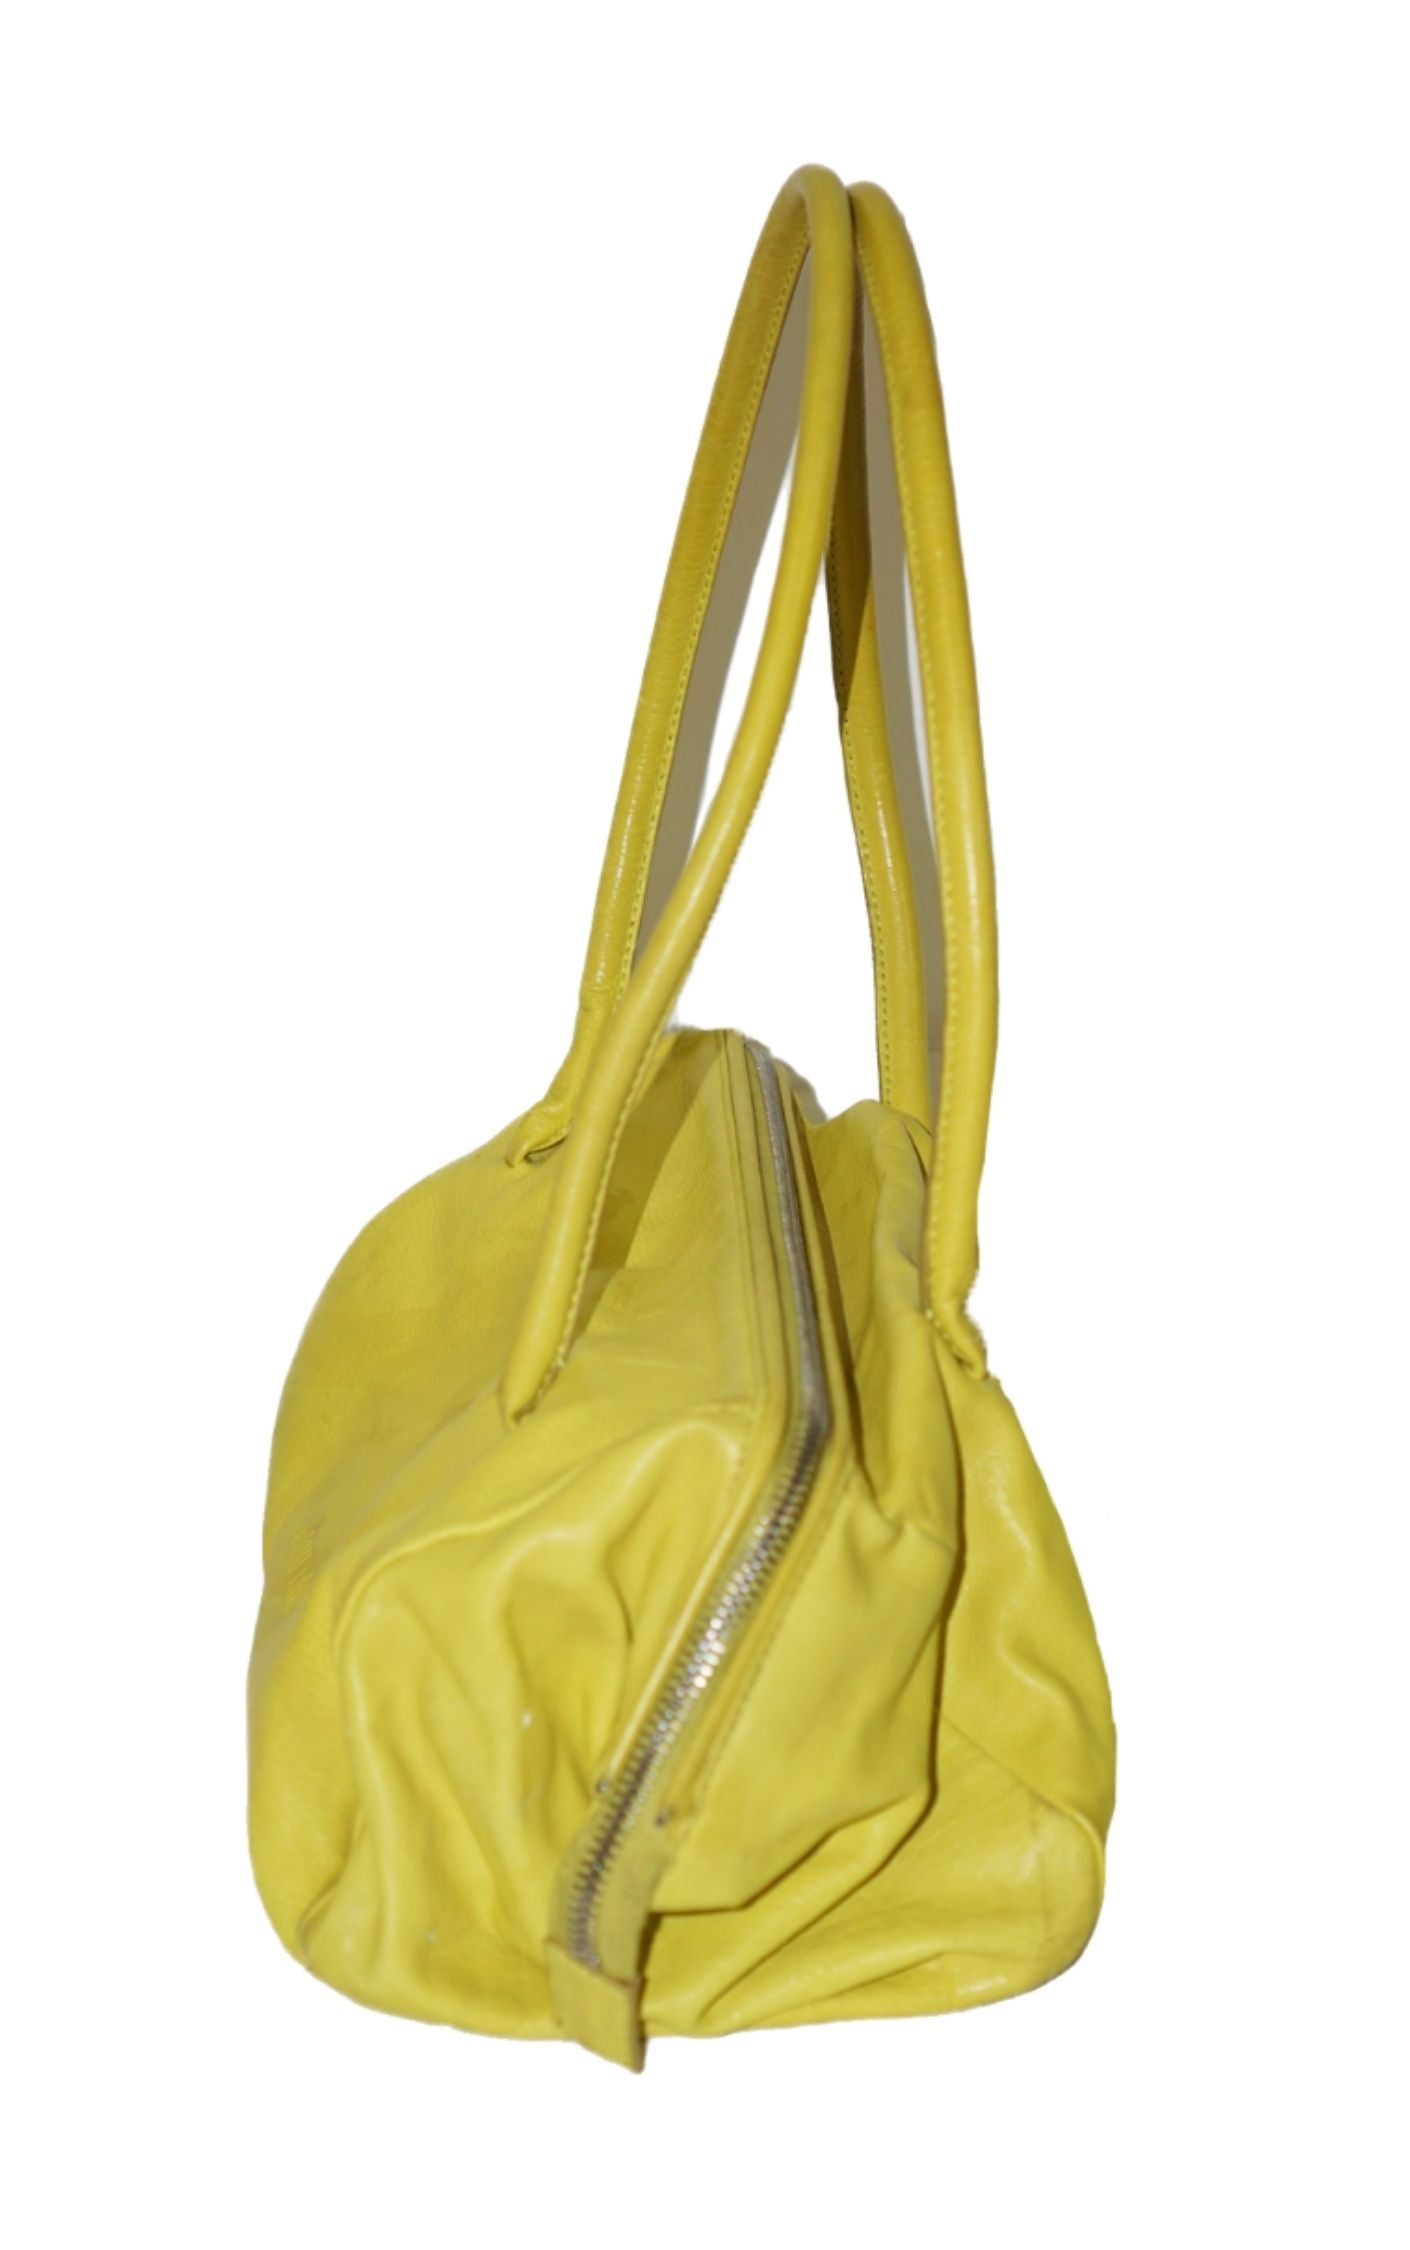 MIU MIU Neon Green Leather Baguette Bag RESELLUM